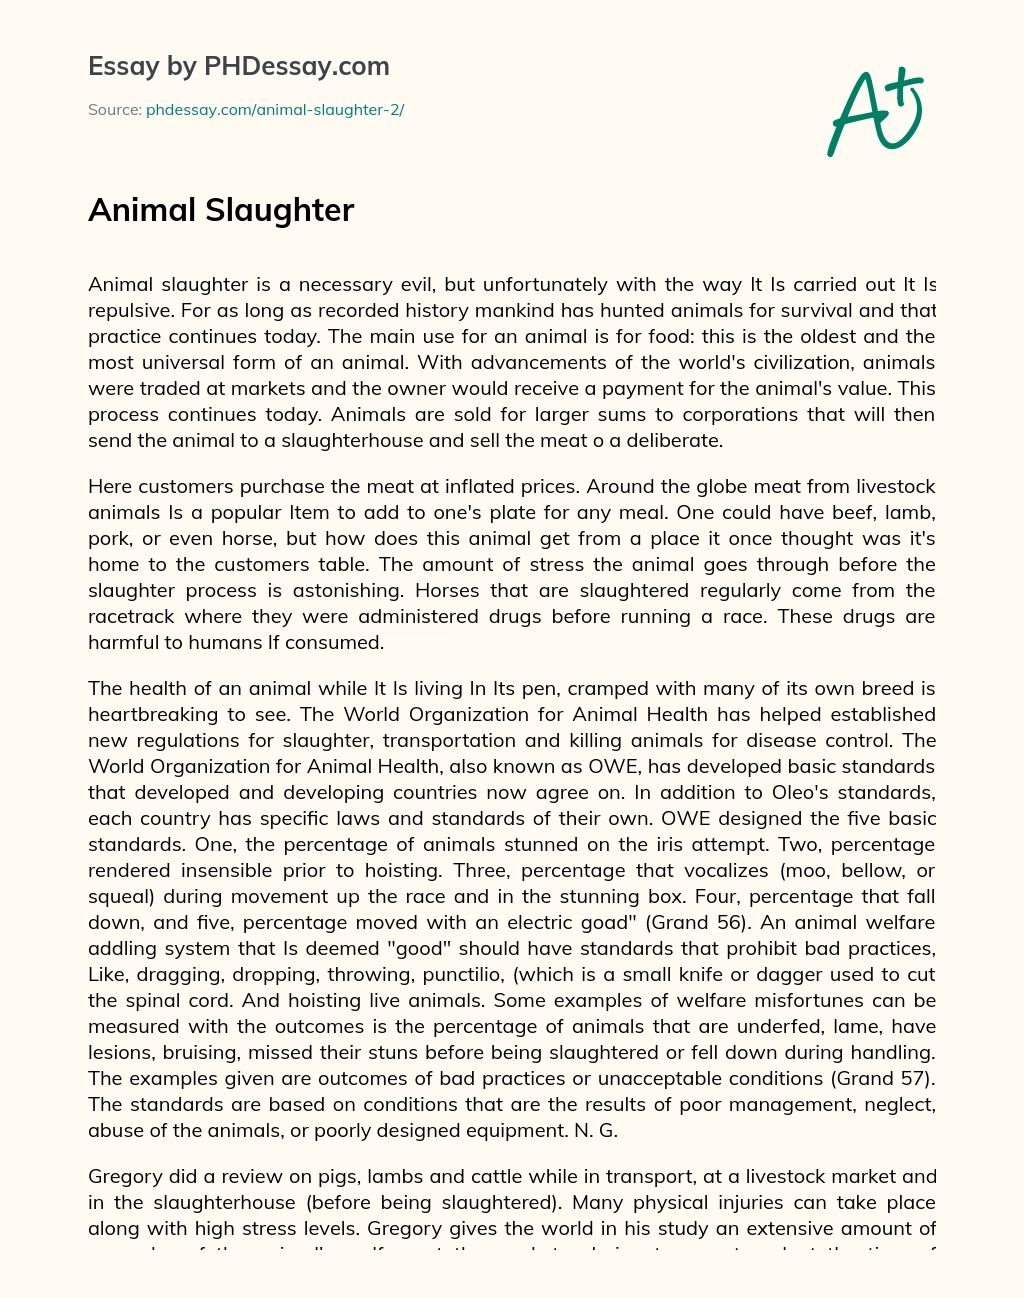 Animal Slaughter essay